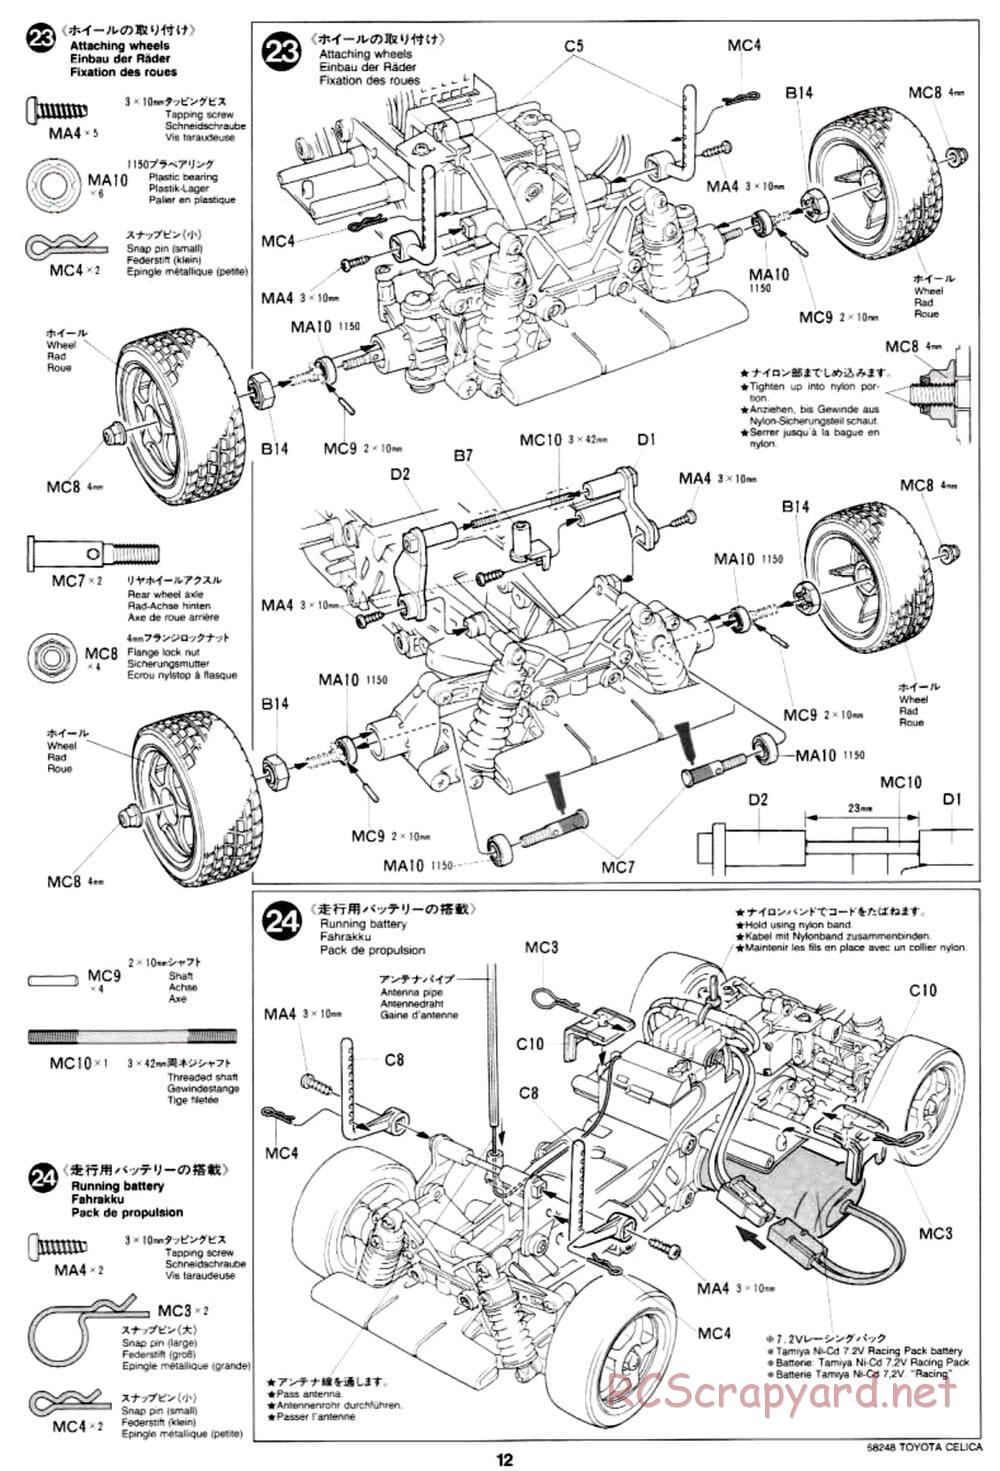 Tamiya - Toyota Celica - FF-02 Chassis - Manual - Page 12